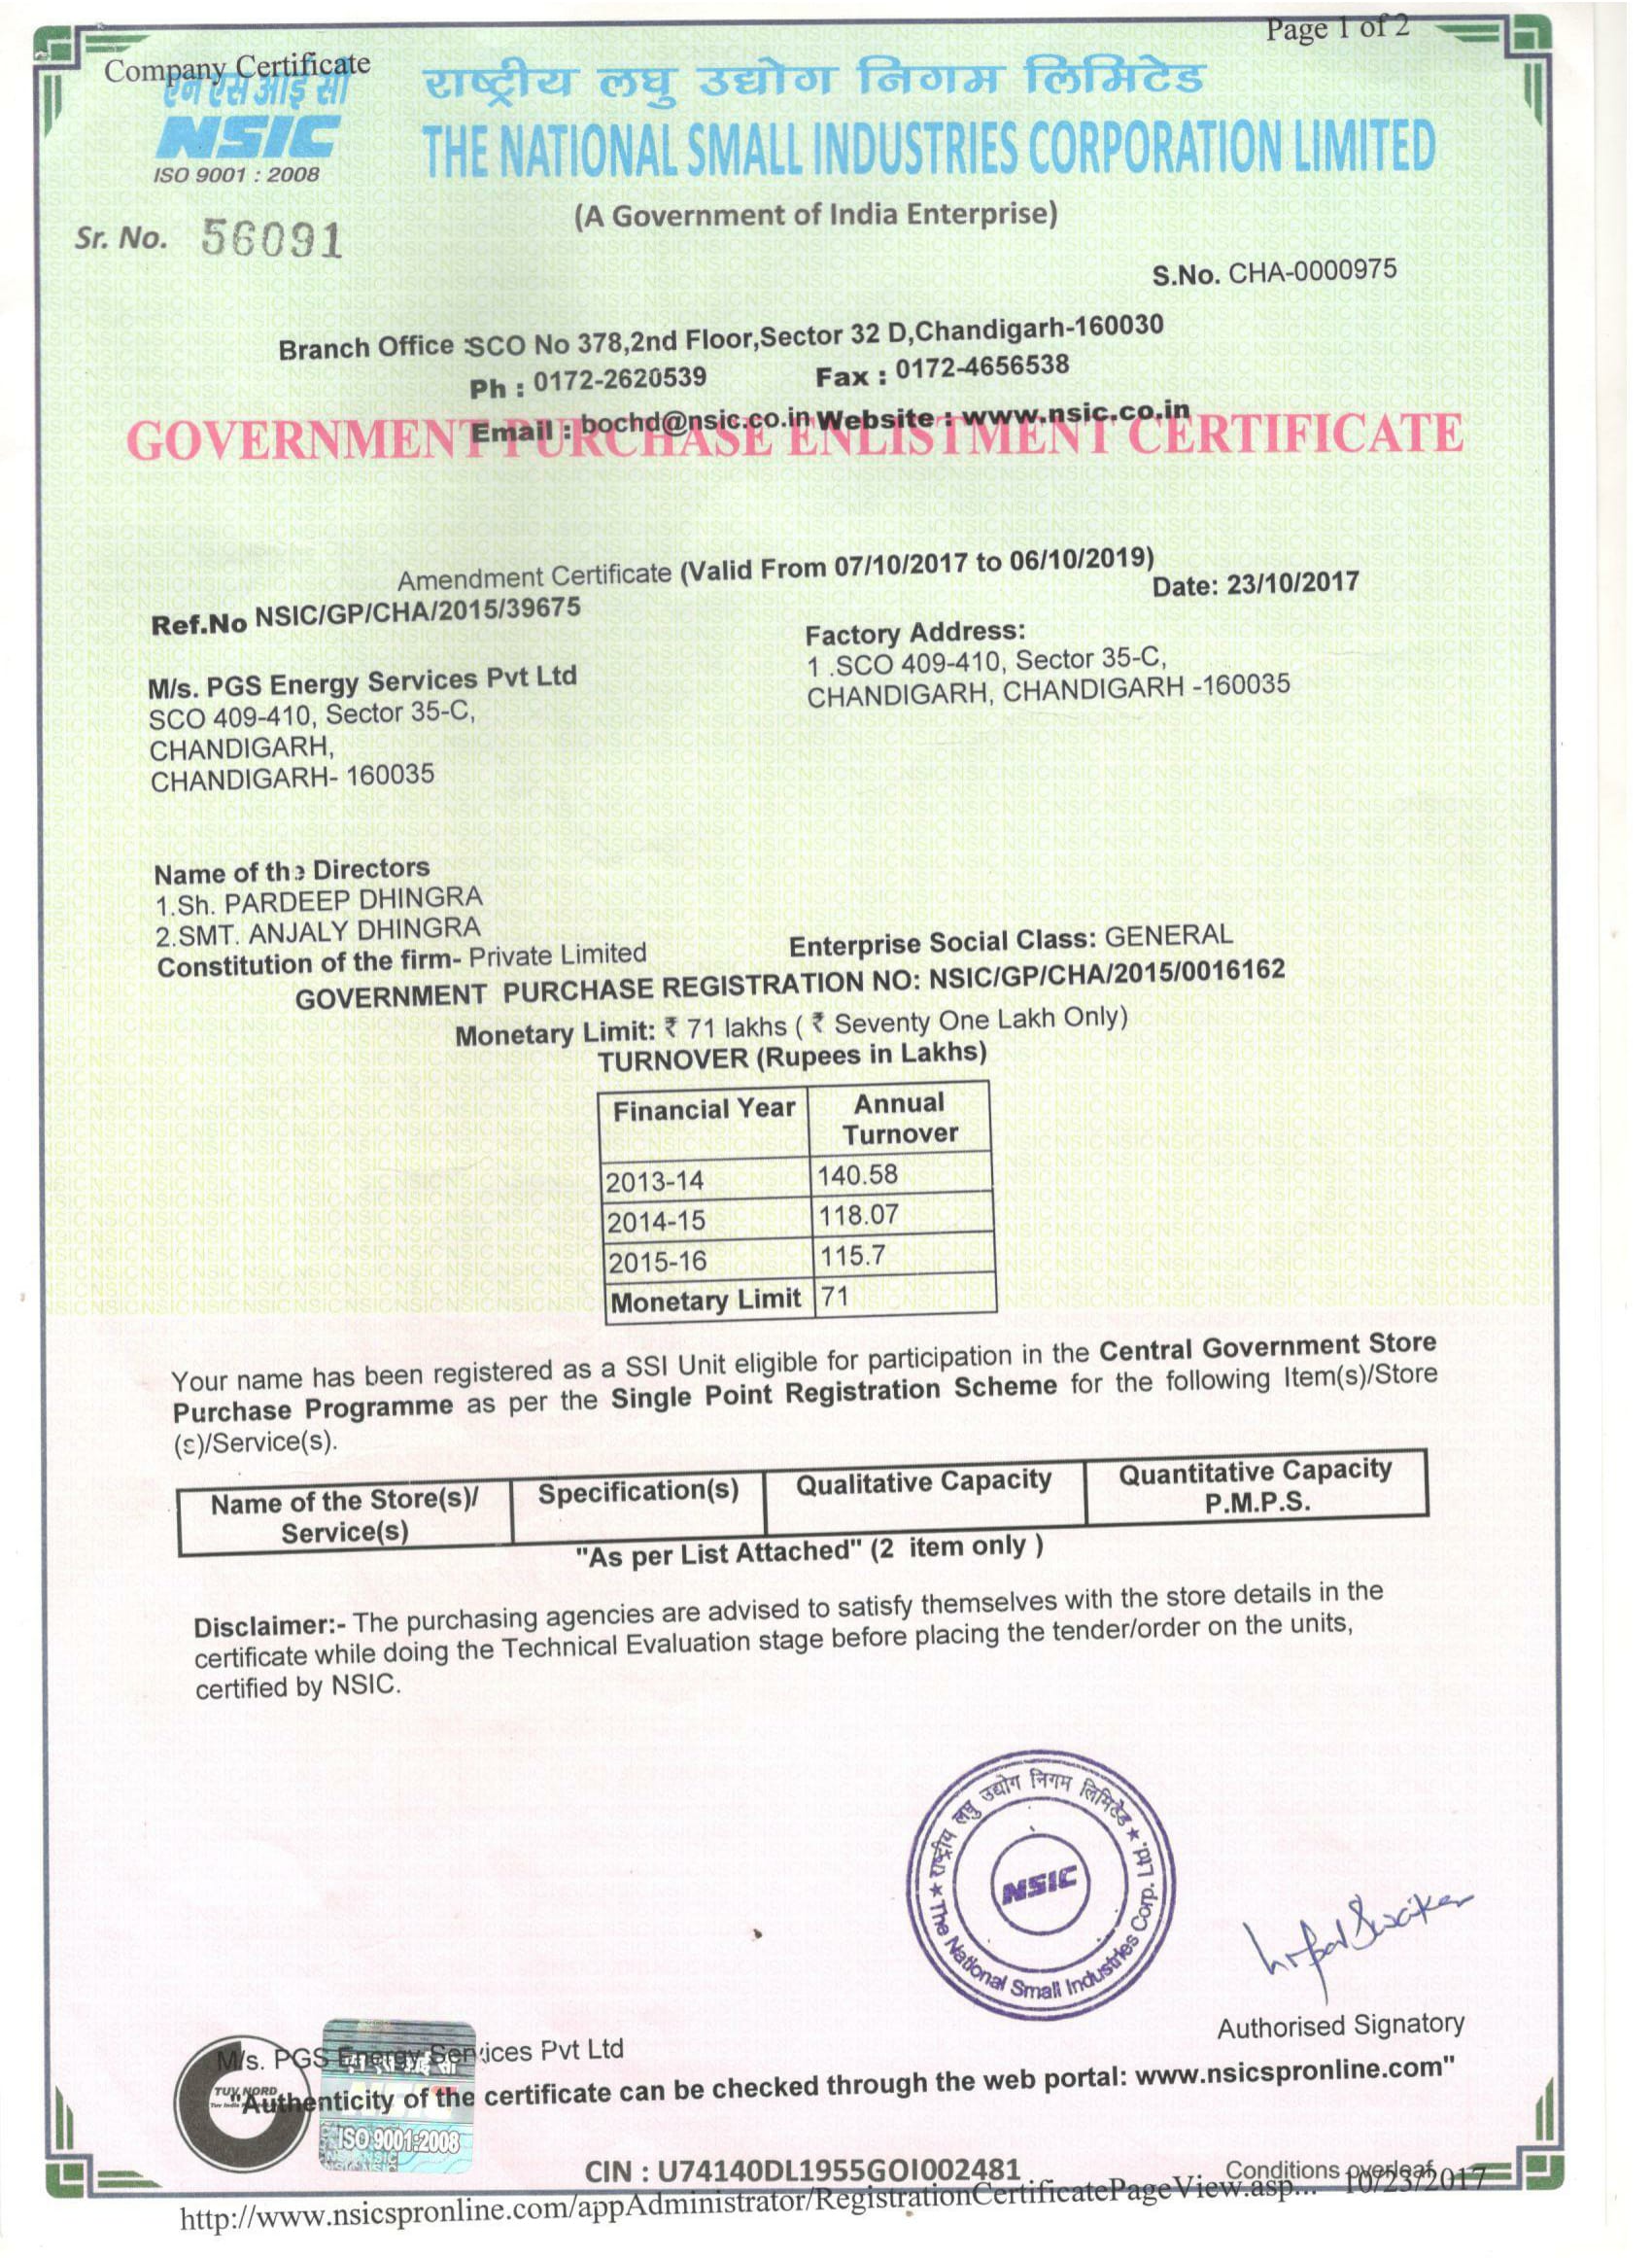 NSIC Certification - PGS Energy Services Pvt. Ltd.